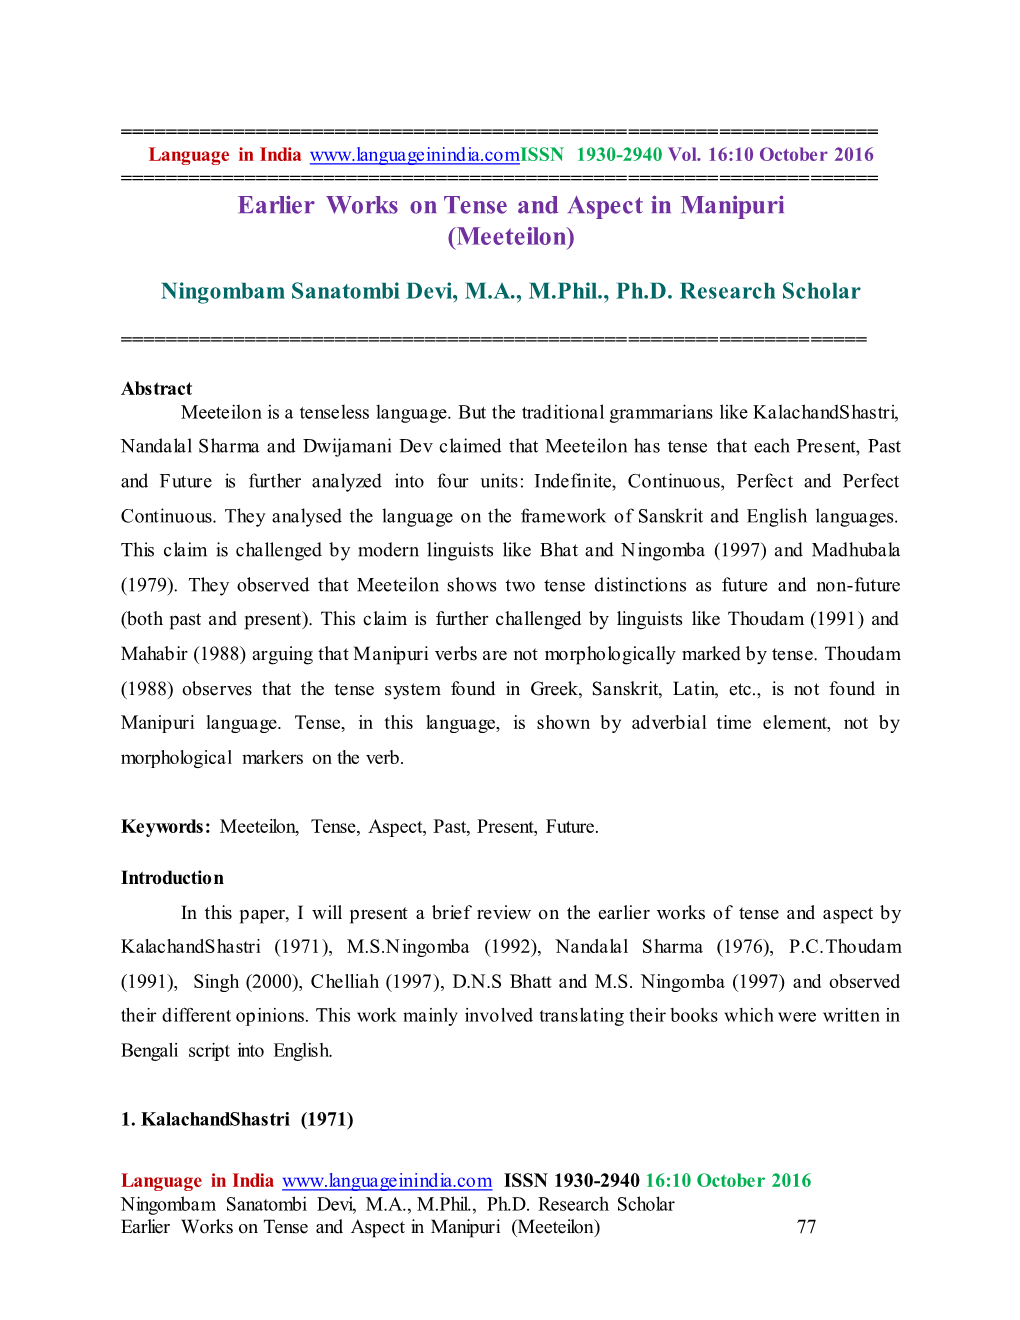 Earlier Works on Tense and Aspect in Manipuri (Meeteilon)